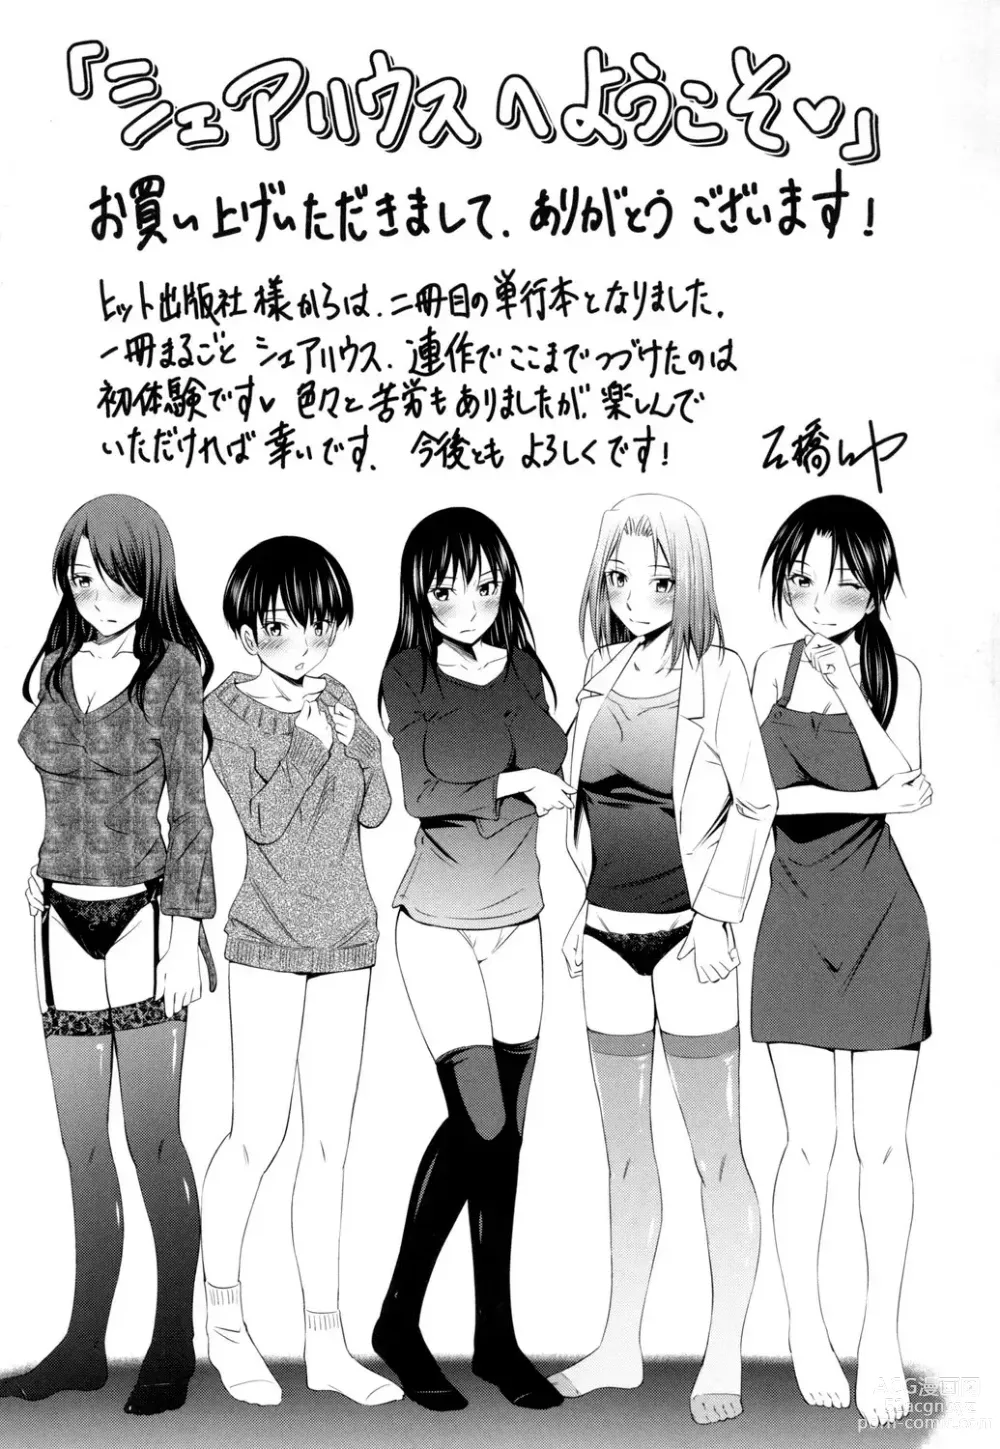 Page 193 of manga Share House e Youkoso